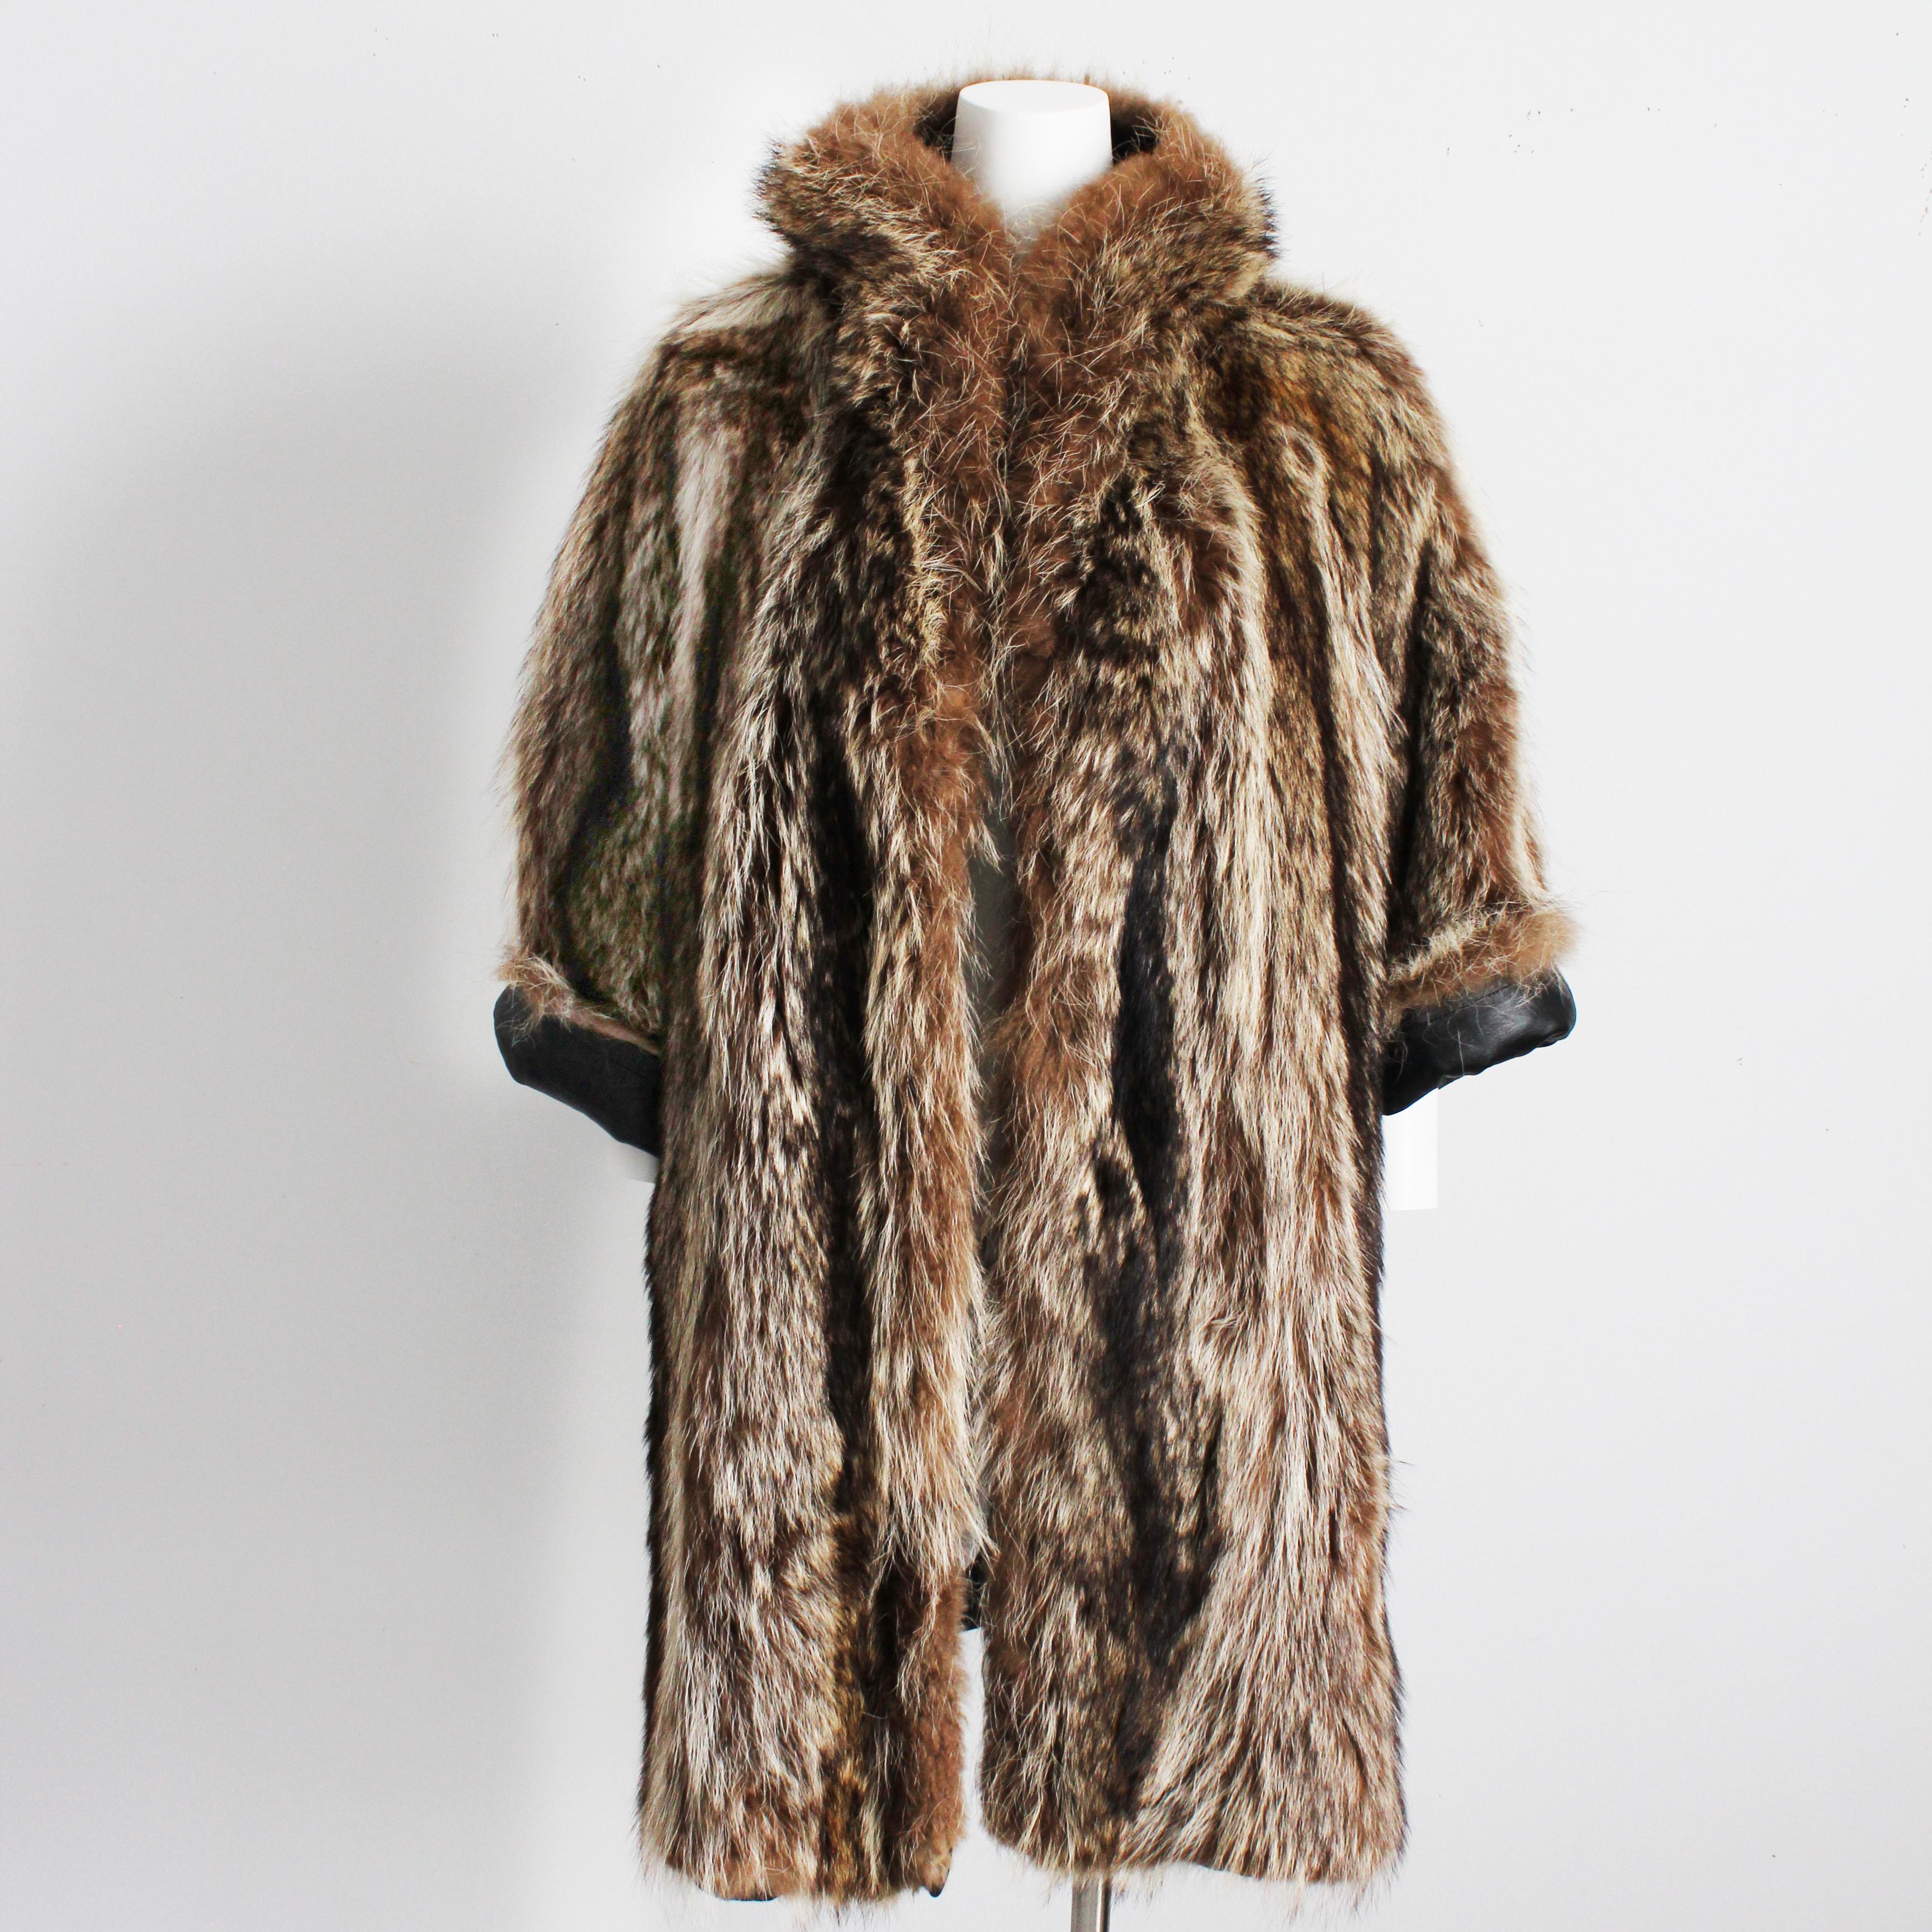 Bonnie Cashin for Sills Coat Black Leather Reversible Raccoon Fur Vintage 1960s  For Sale 1